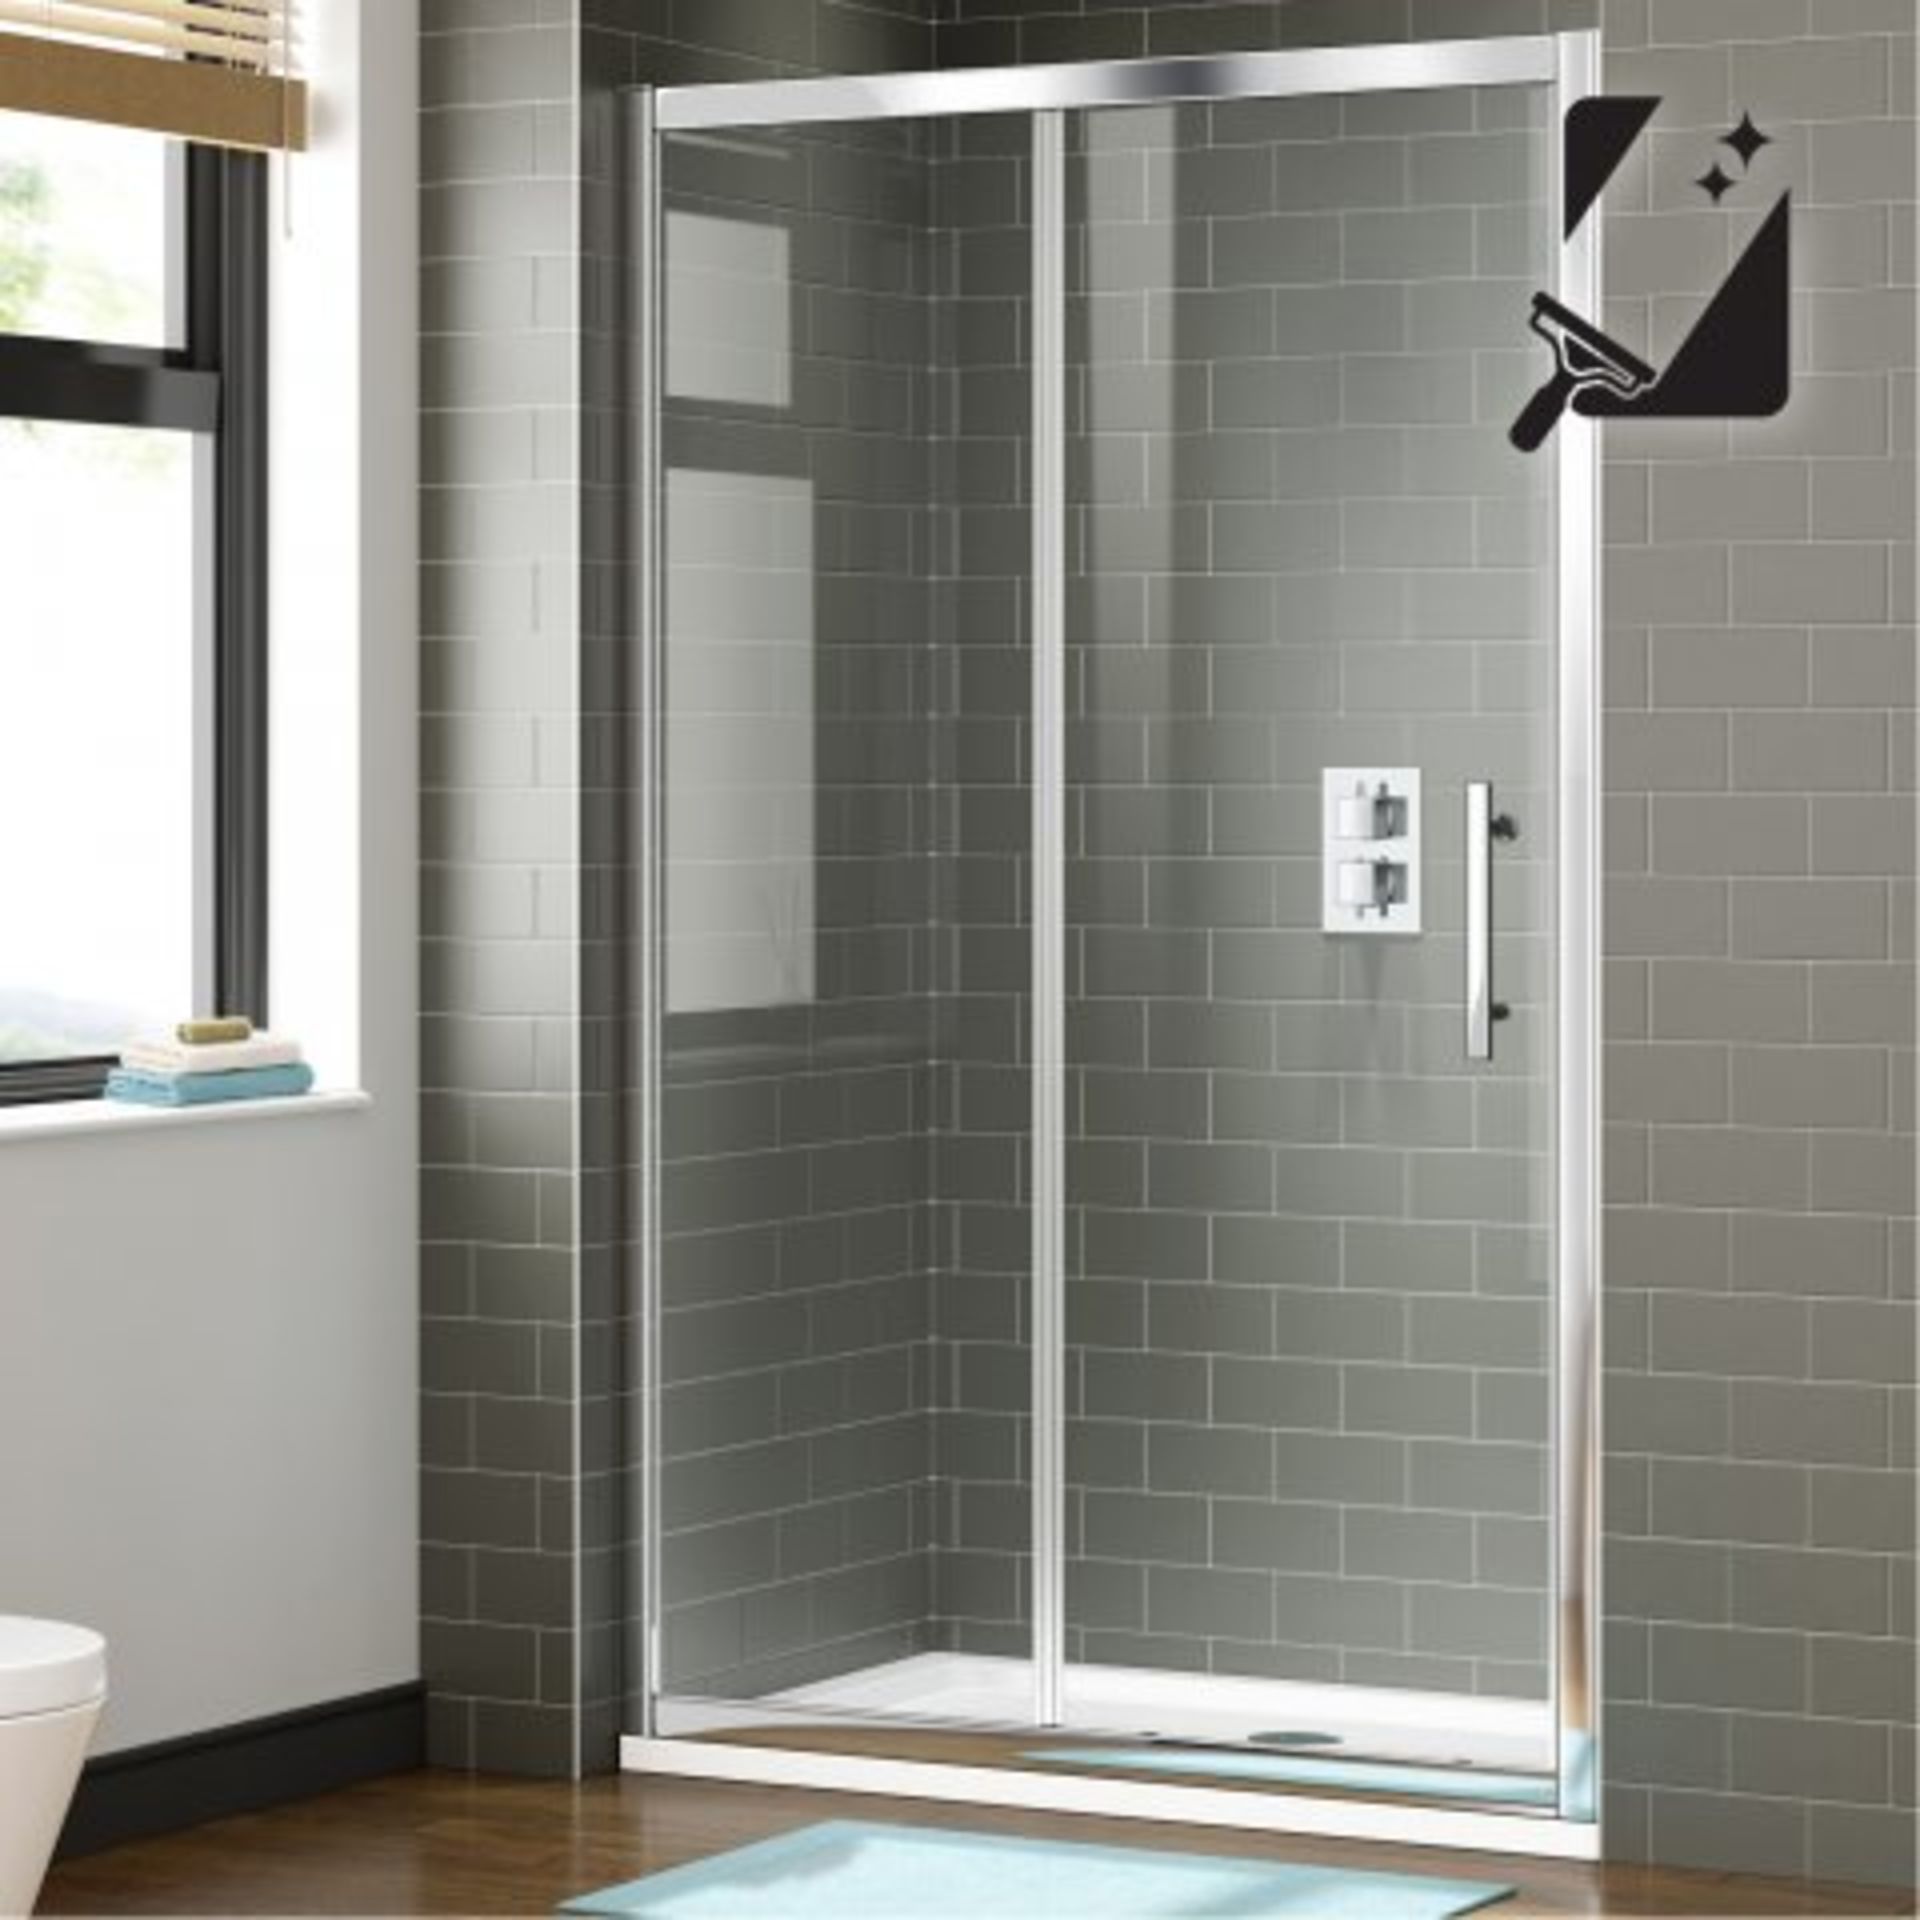 (SKU24) 1000mm - 8mm - Premium EasyClean Sliding Shower Door. RRP £452.99. Make the most of the dead